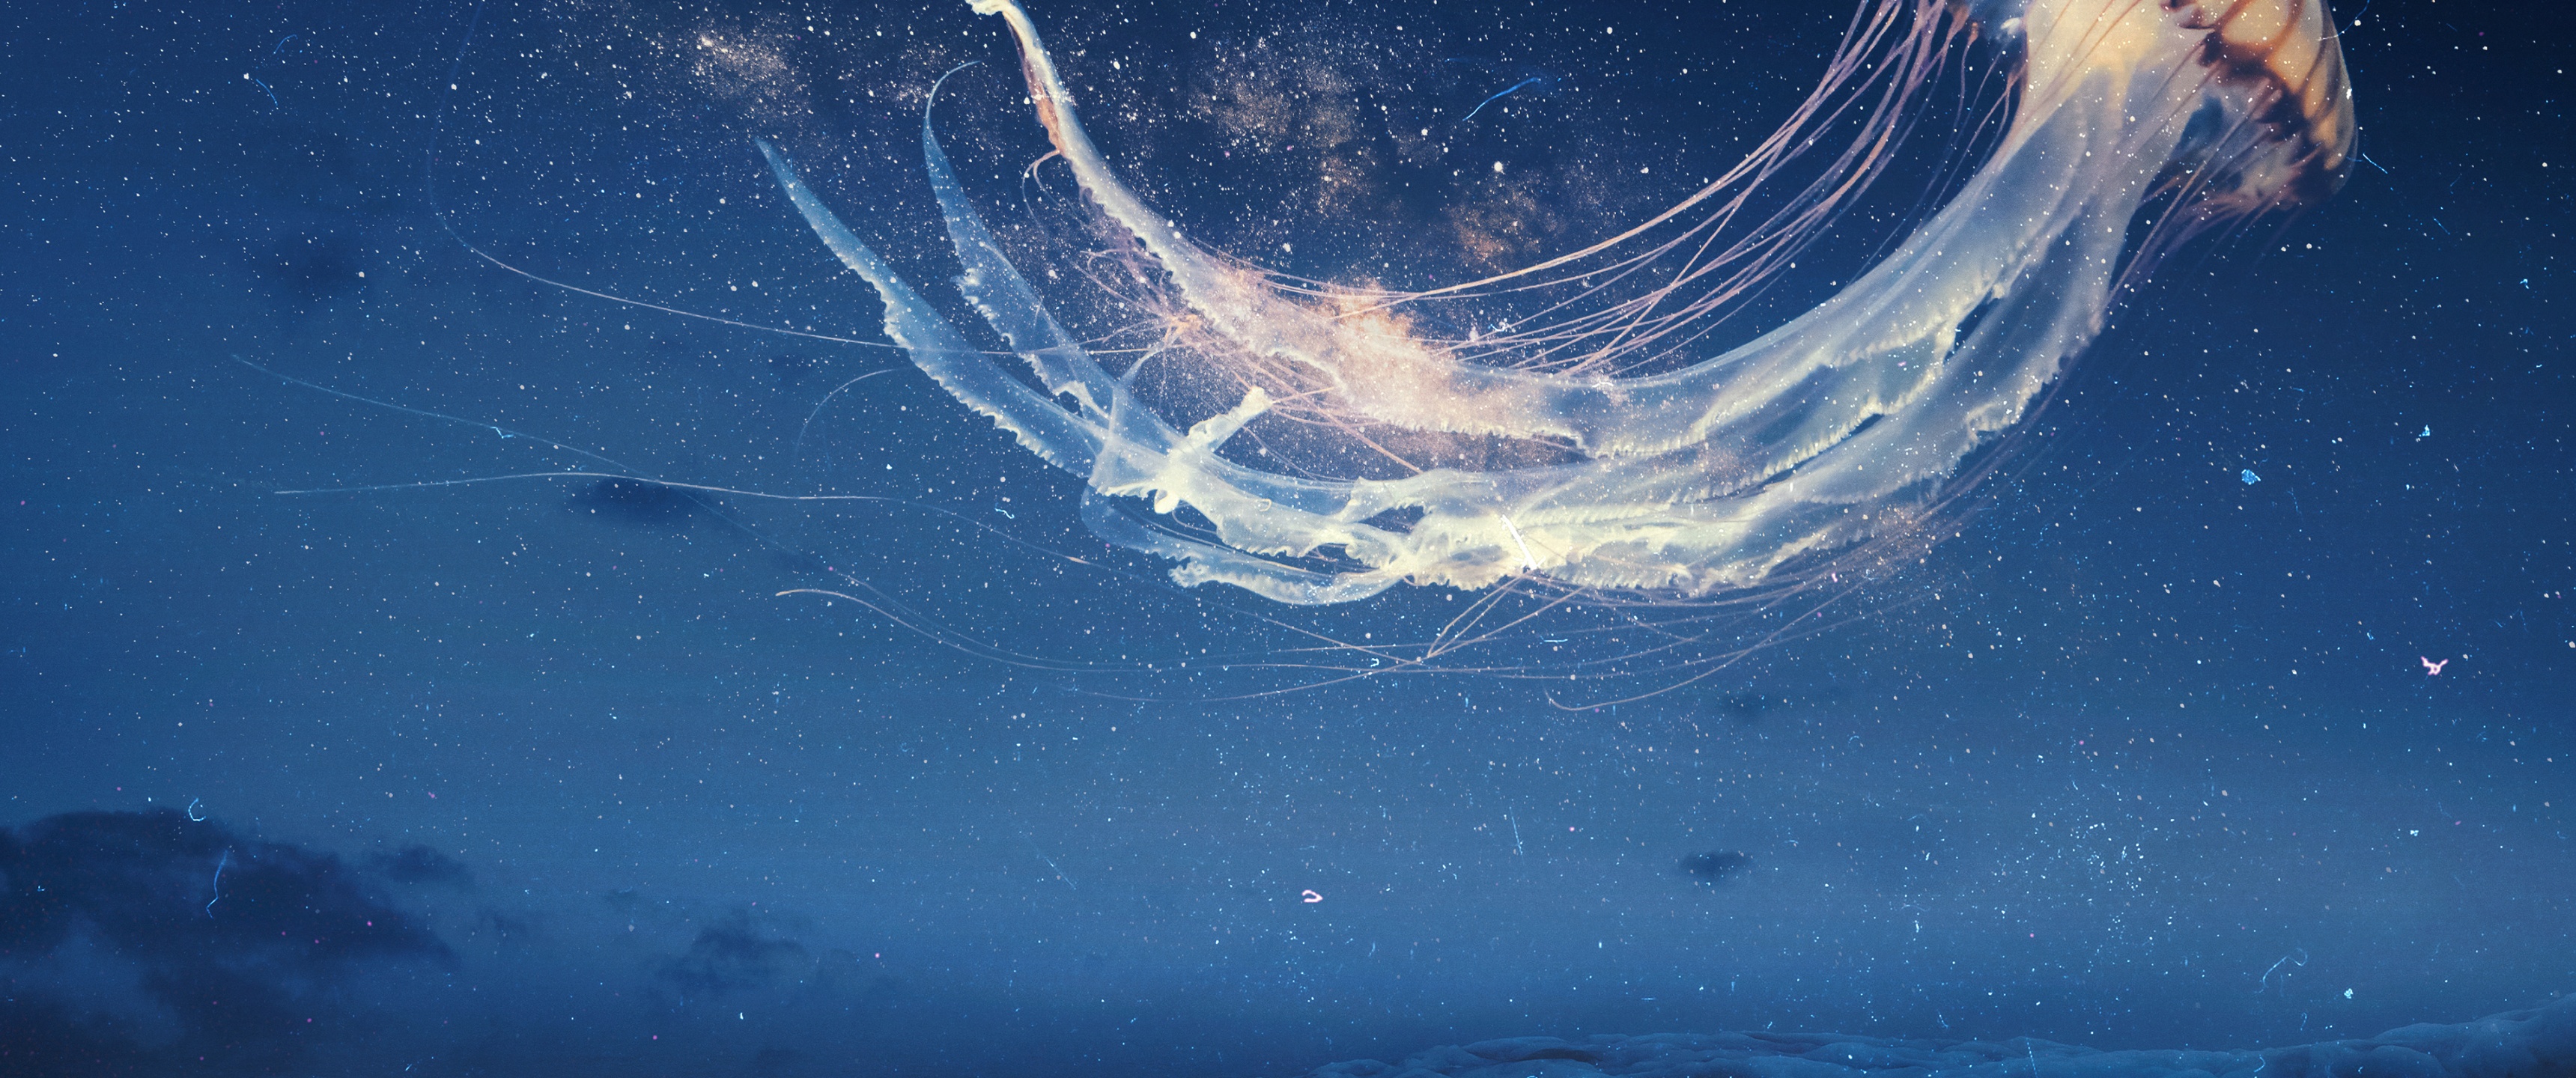 Jellyfish Wallpaper 4K, Dream, Surreal, Night sky, Alone, Fantasy